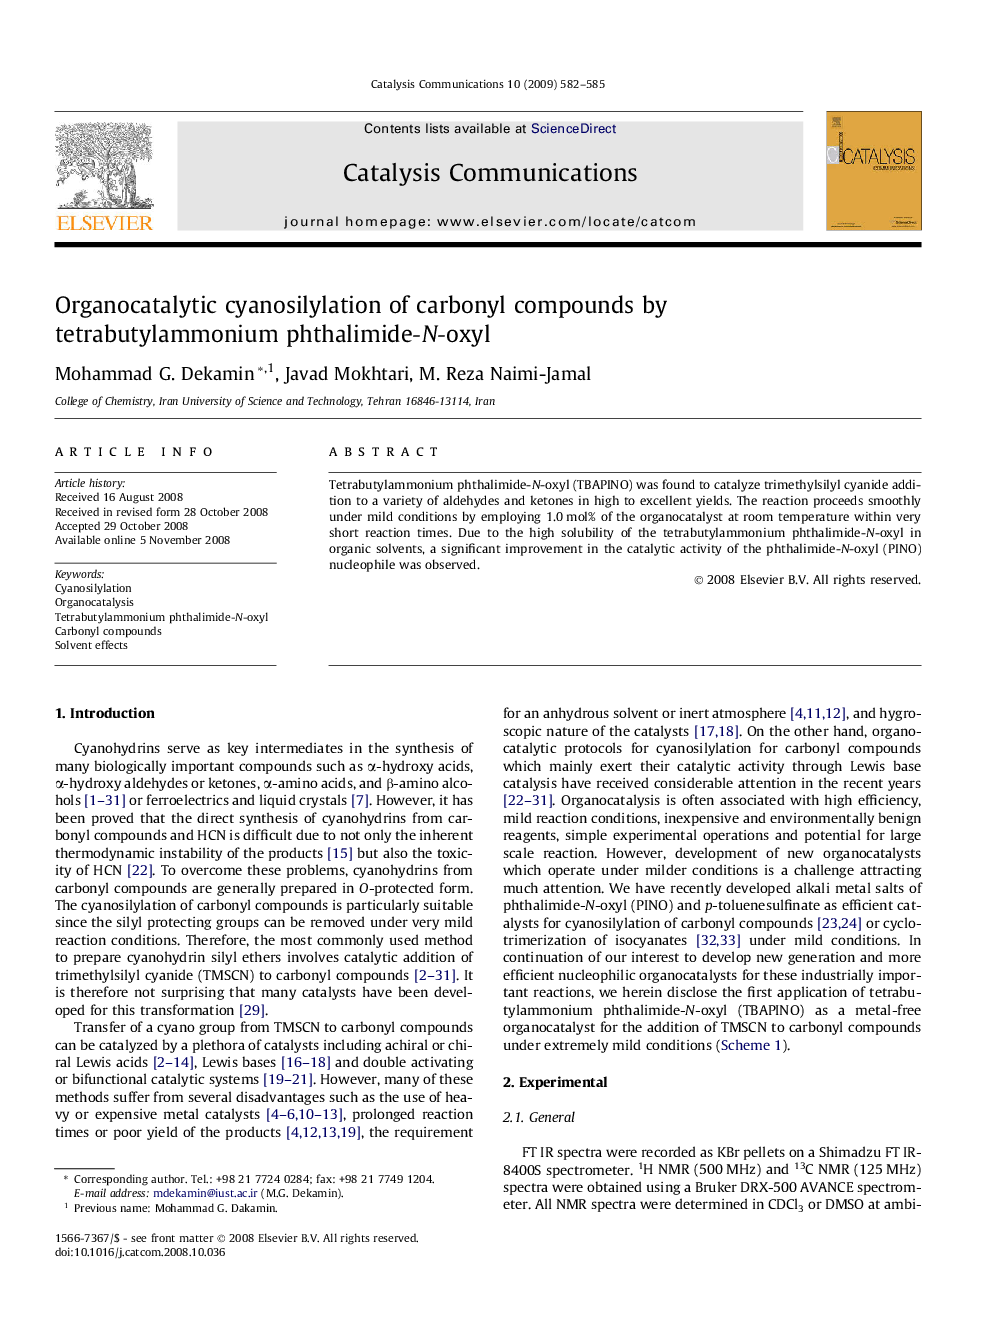 Organocatalytic cyanosilylation of carbonyl compounds by tetrabutylammonium phthalimide-N-oxyl